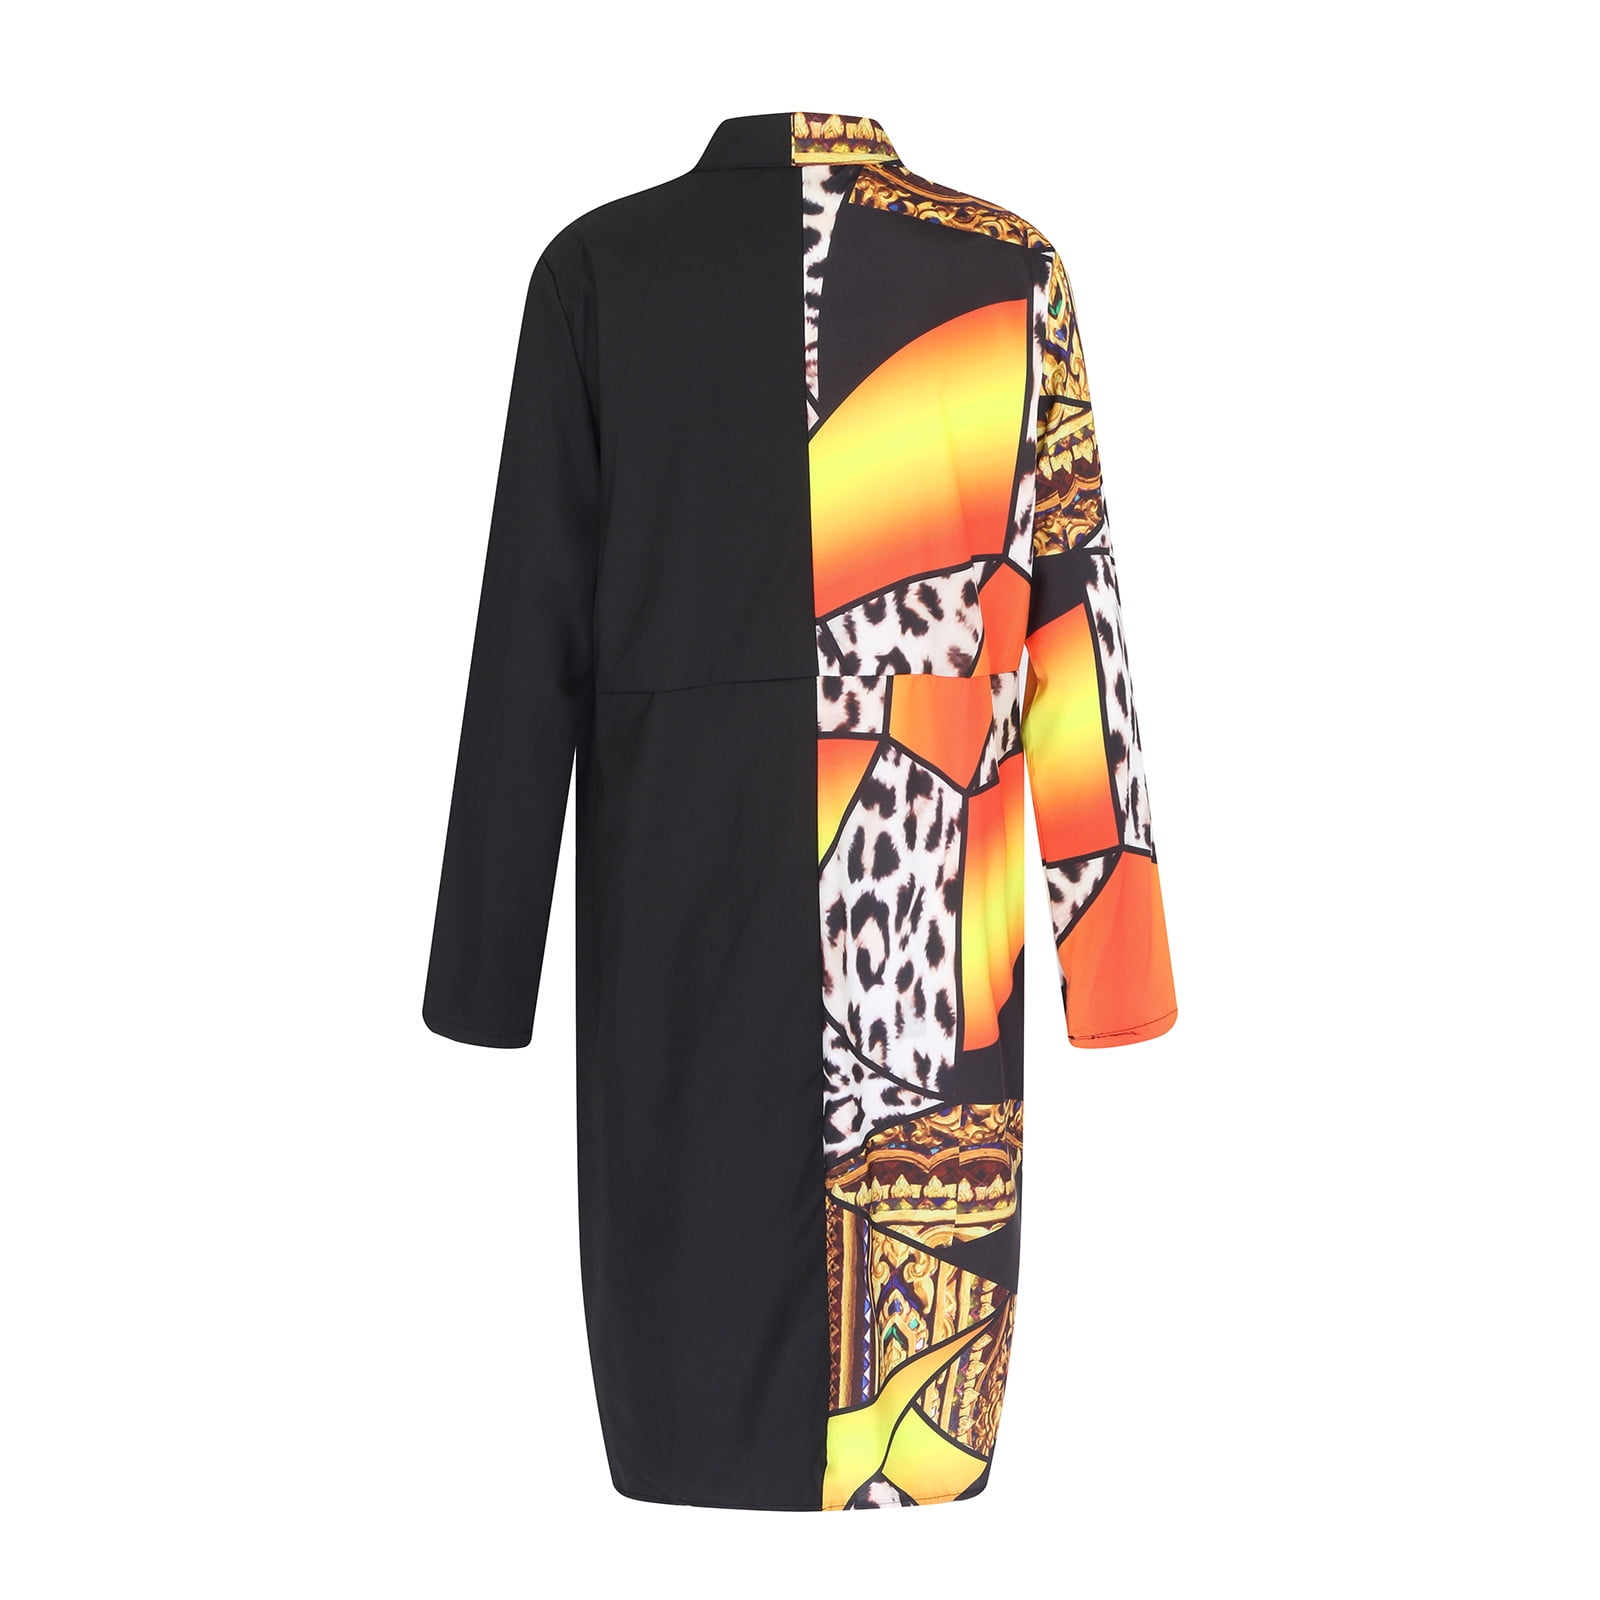 OLUOLIN Womens Casual African Geometric Patterns Print Long Sleeve Open Front Long Blouse Loose Tops Outwear Jacket Coat